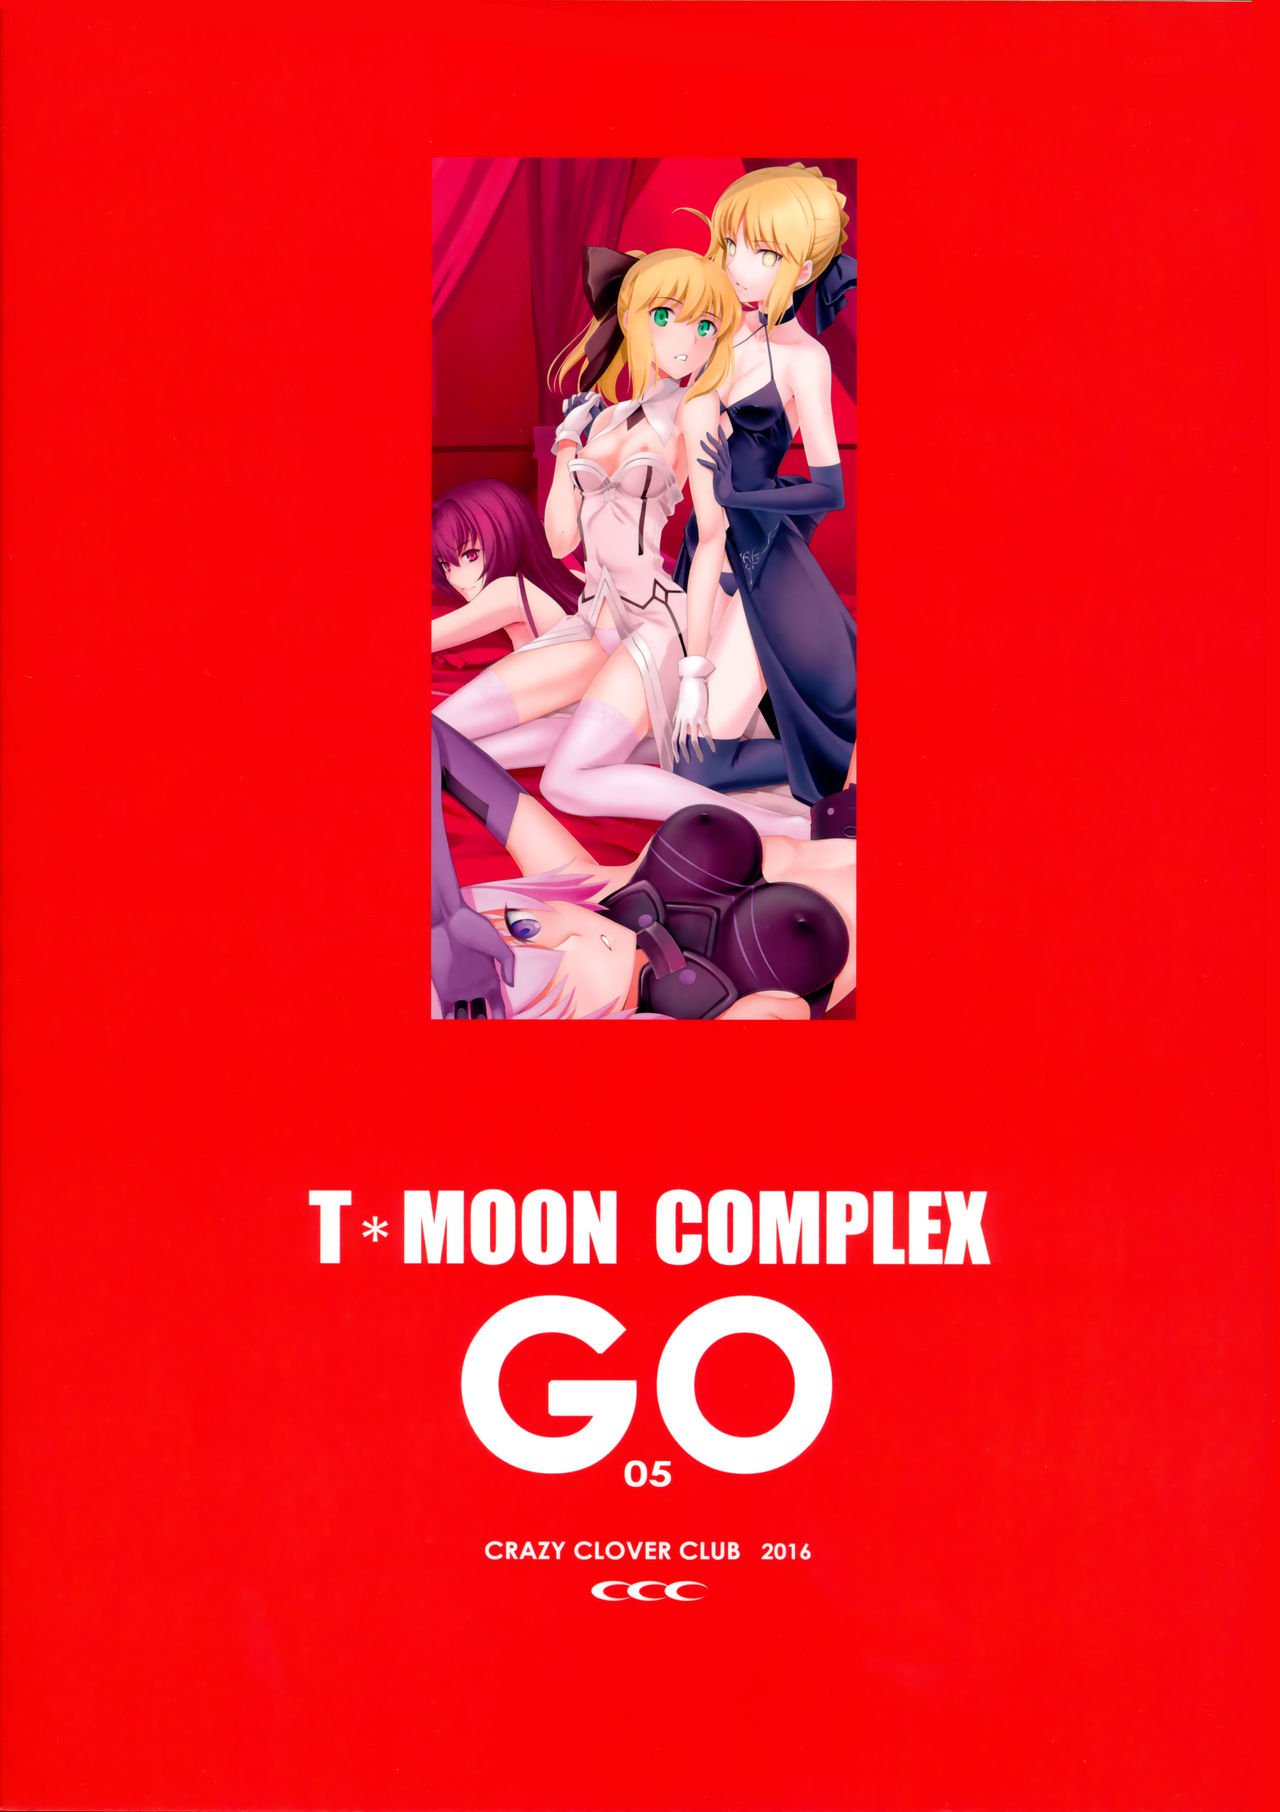 TMOON COMPLEX GO 05